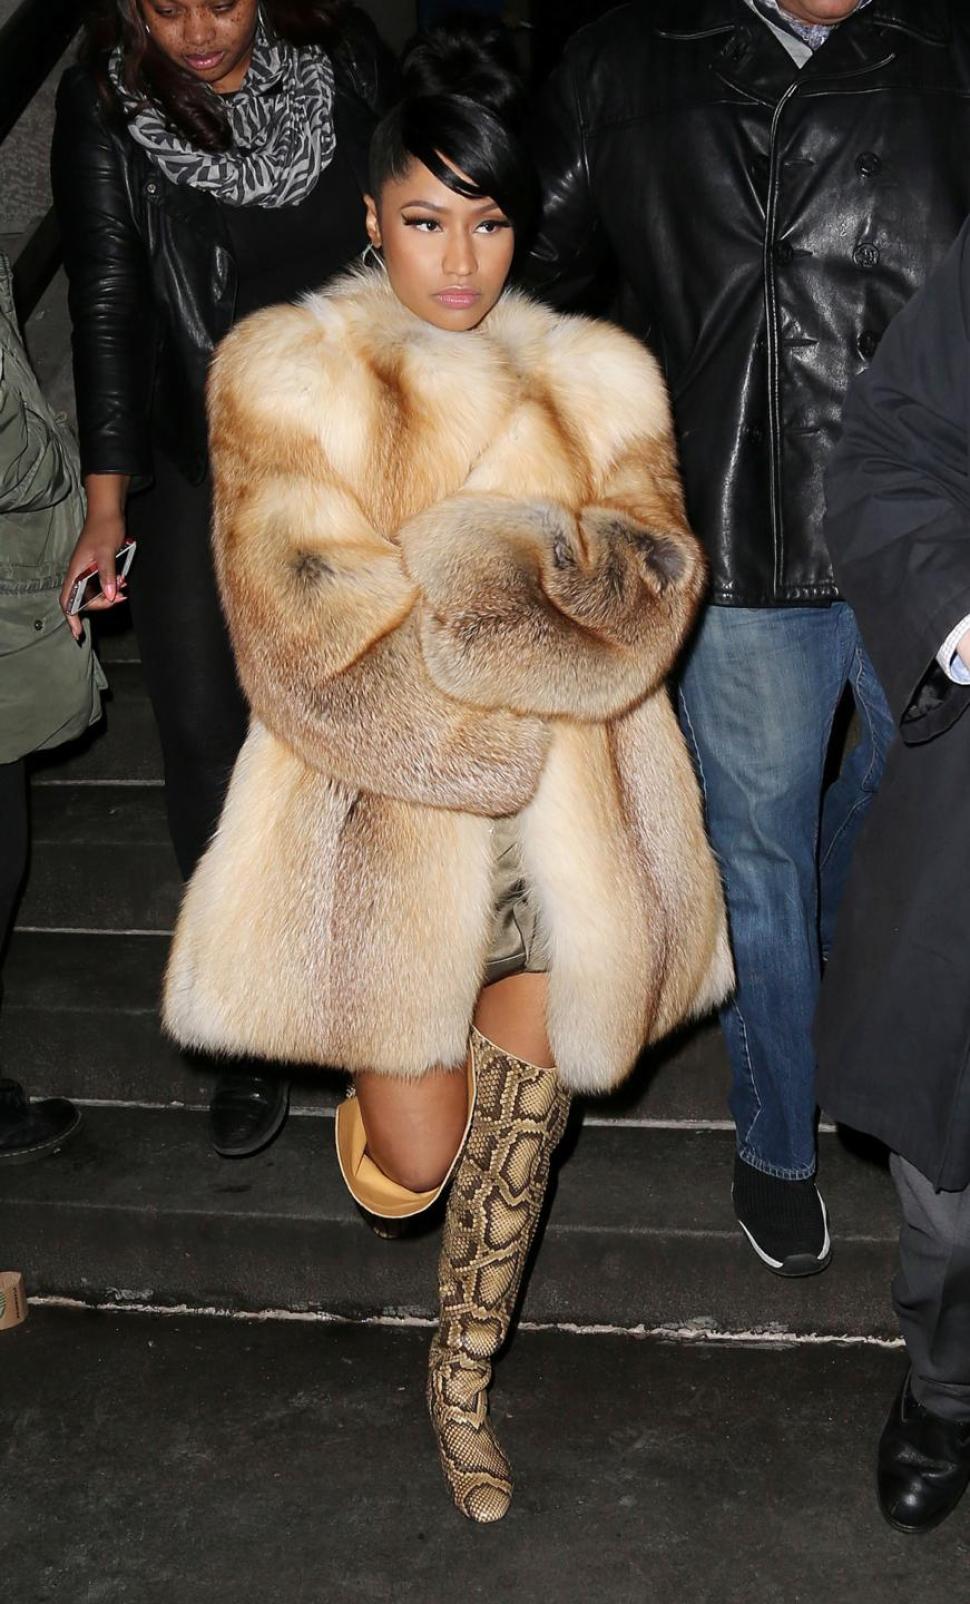 It’s a Minaj-erie of animal styles for Nicki at Fashion Week.